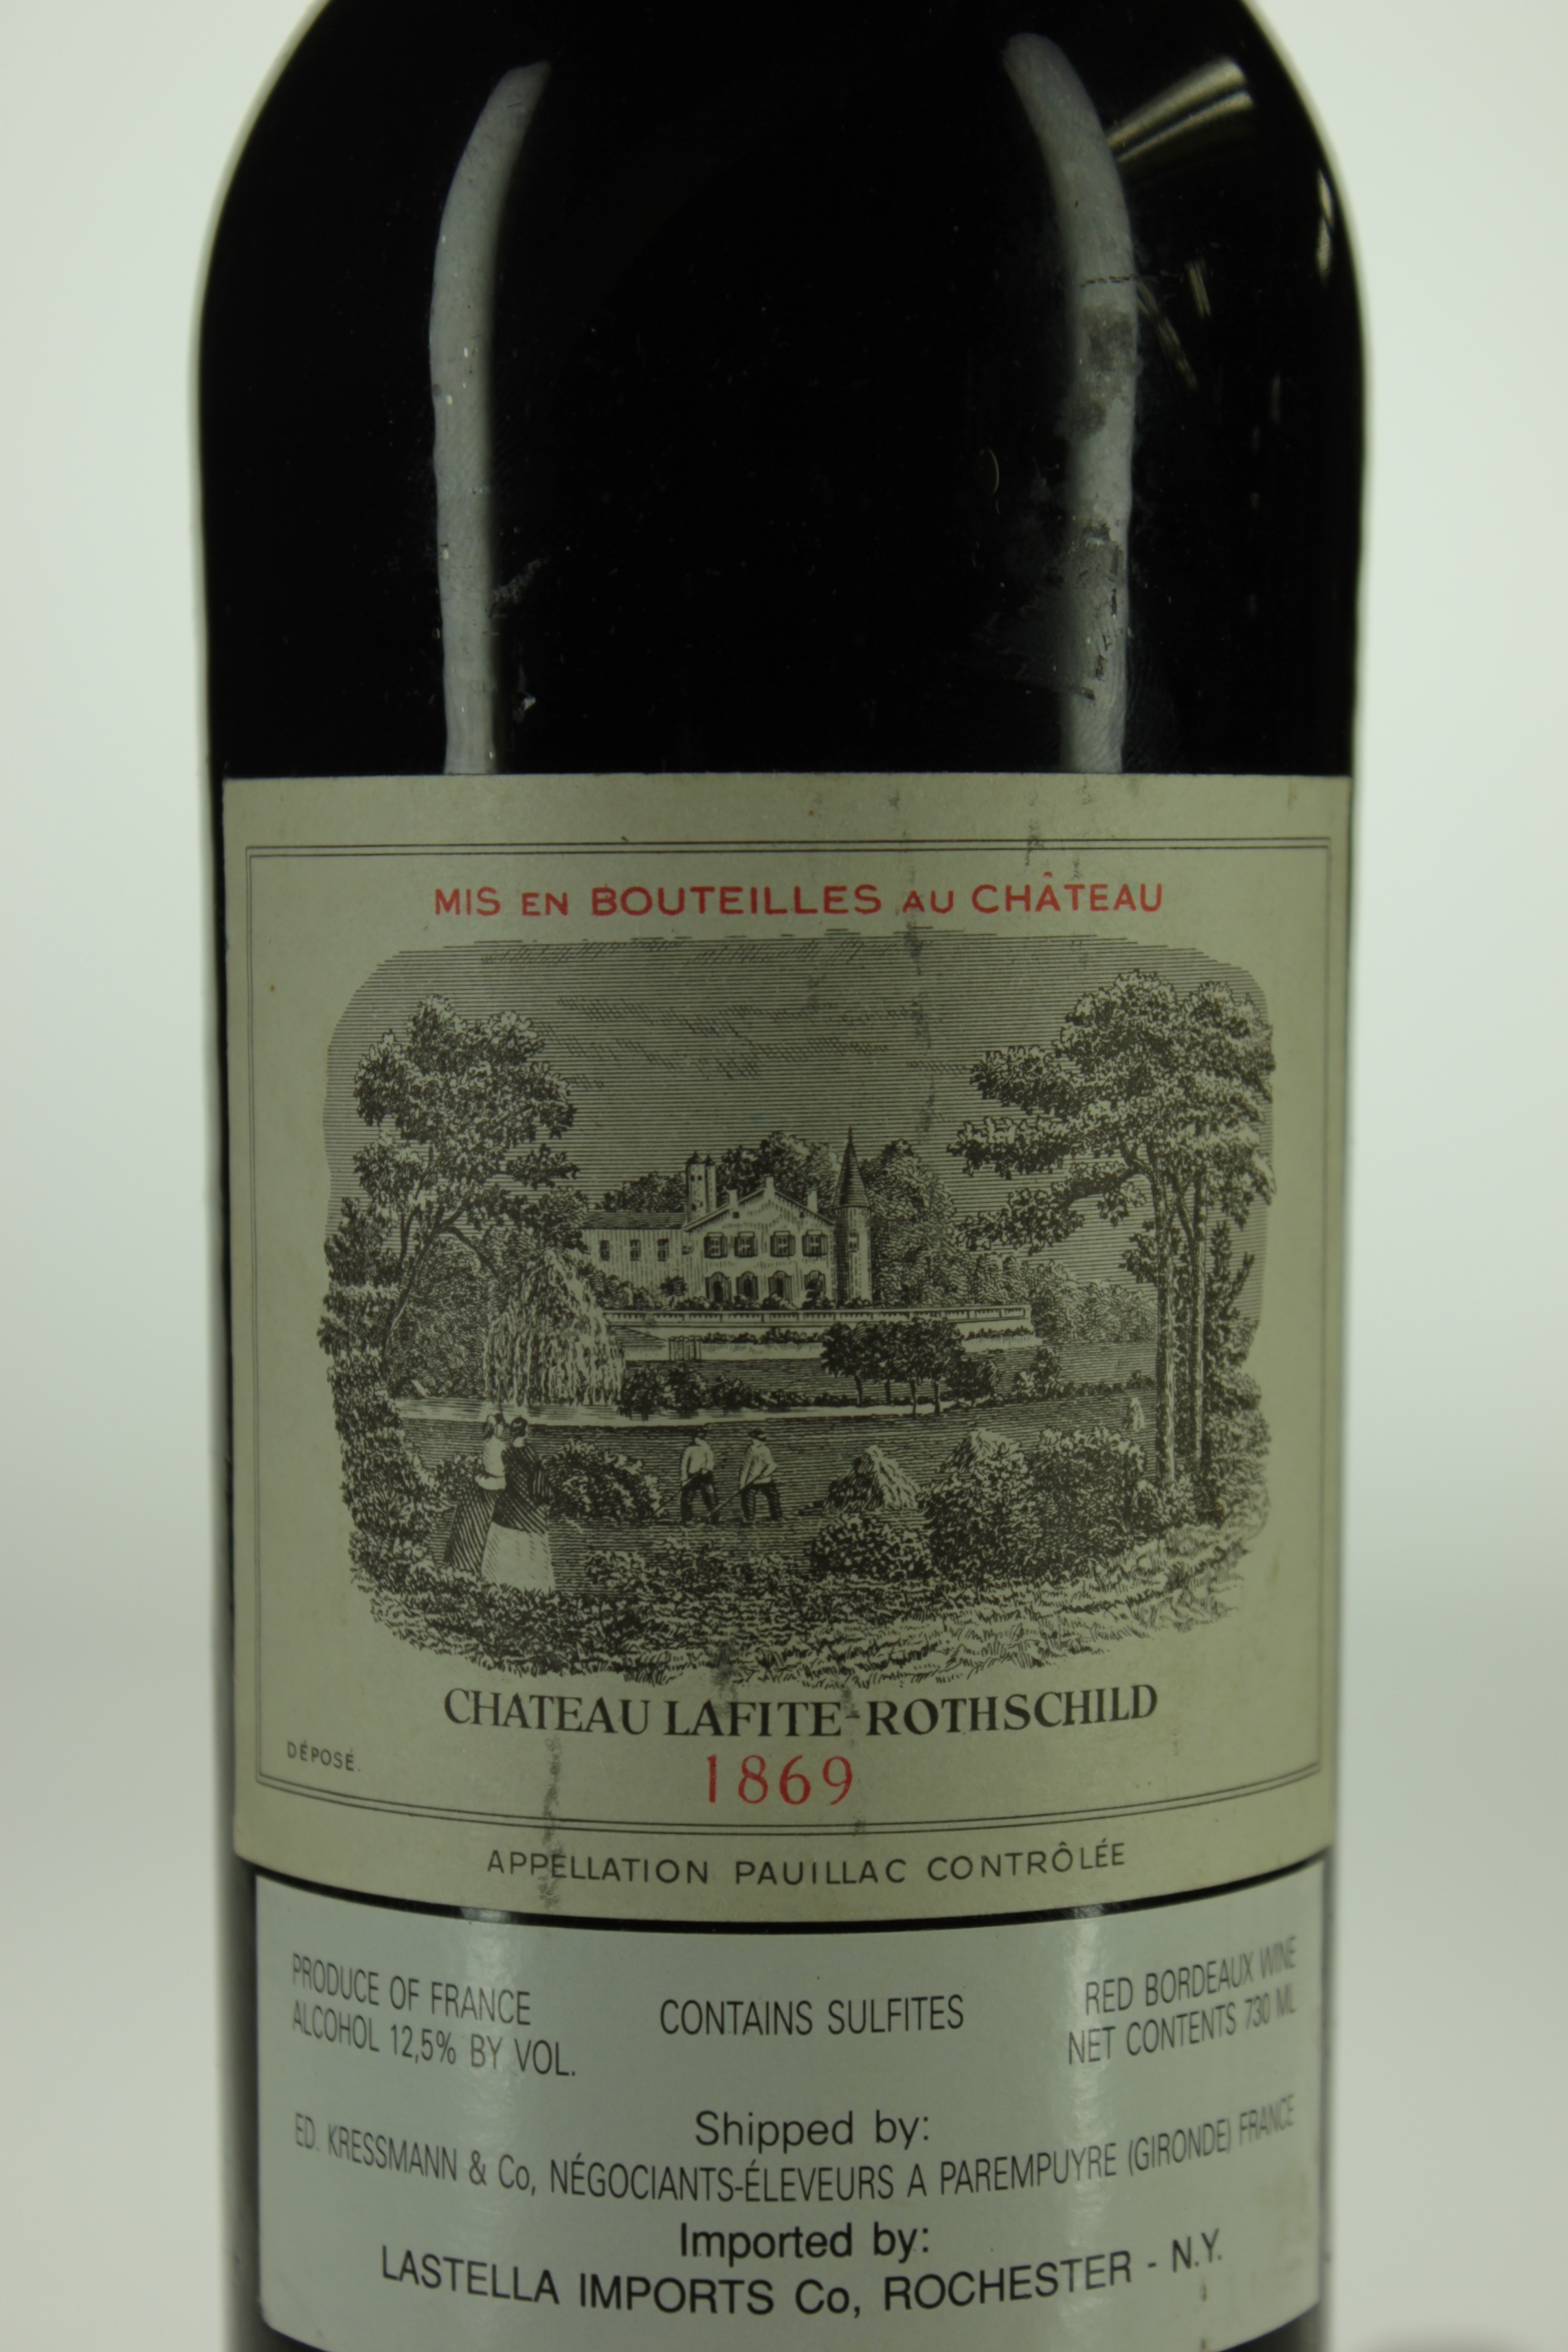 1869 Chateau Lafite-Rothschild label